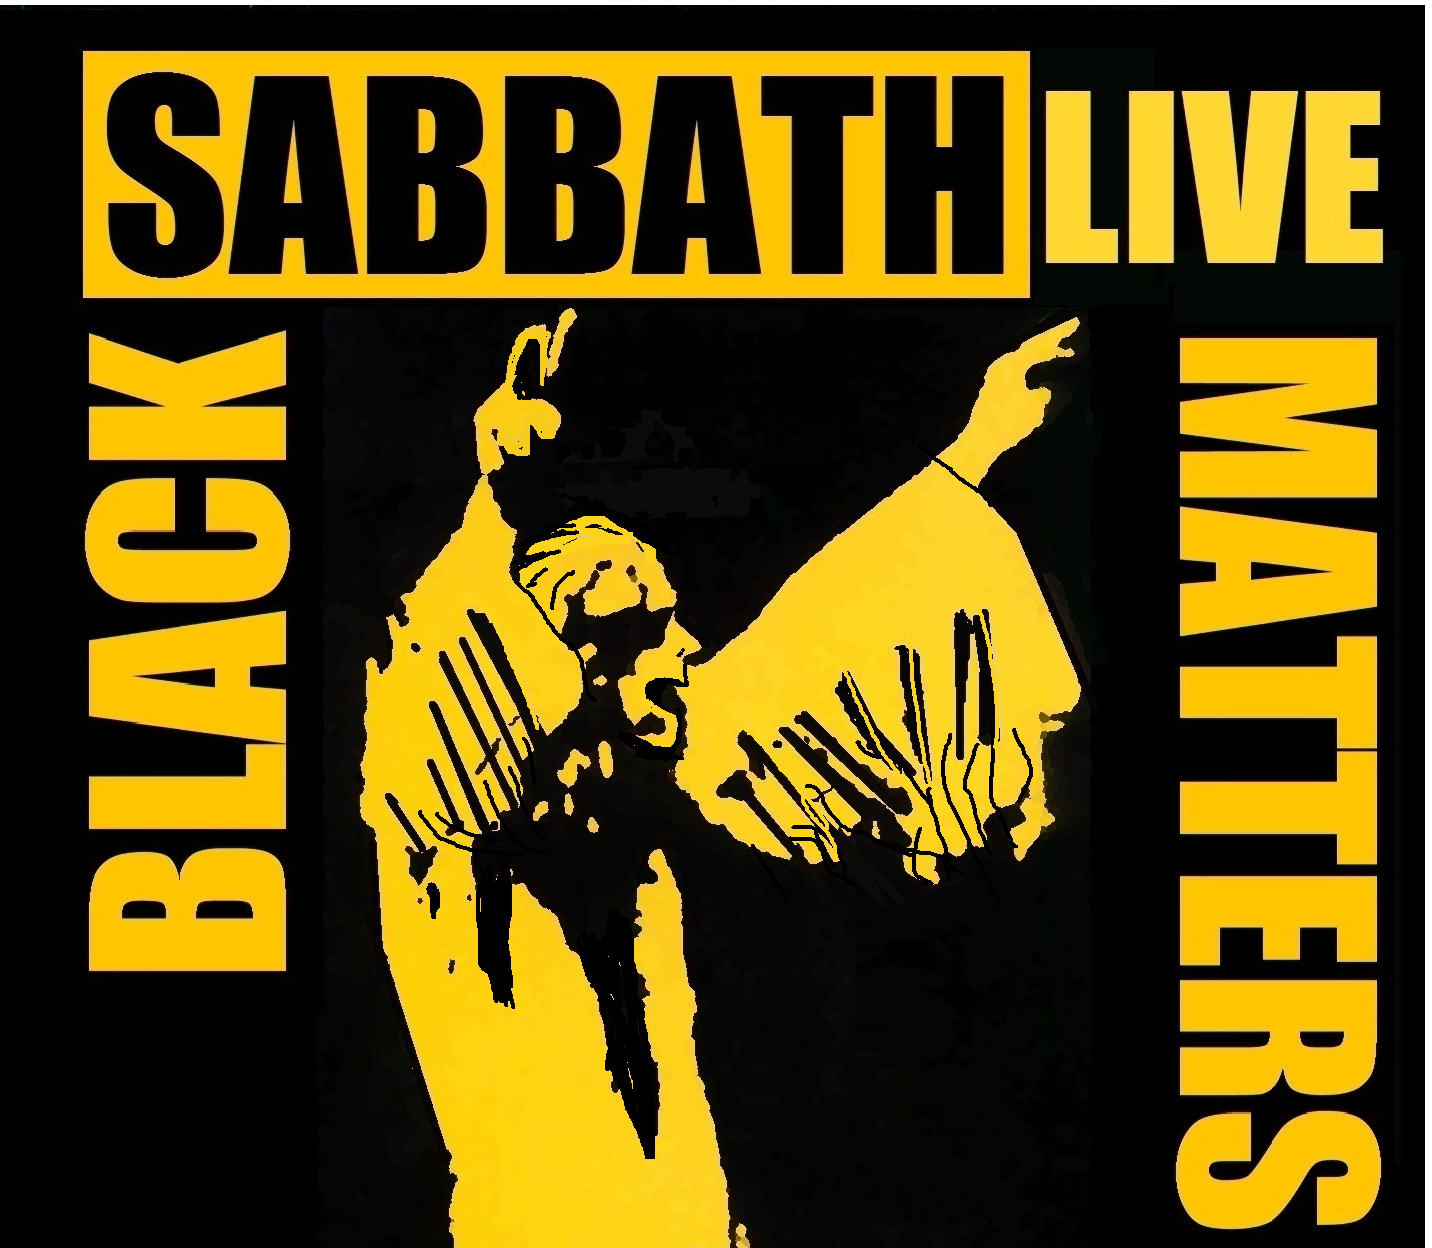 Album cover parody of Vol. 4 by Black Sabbath